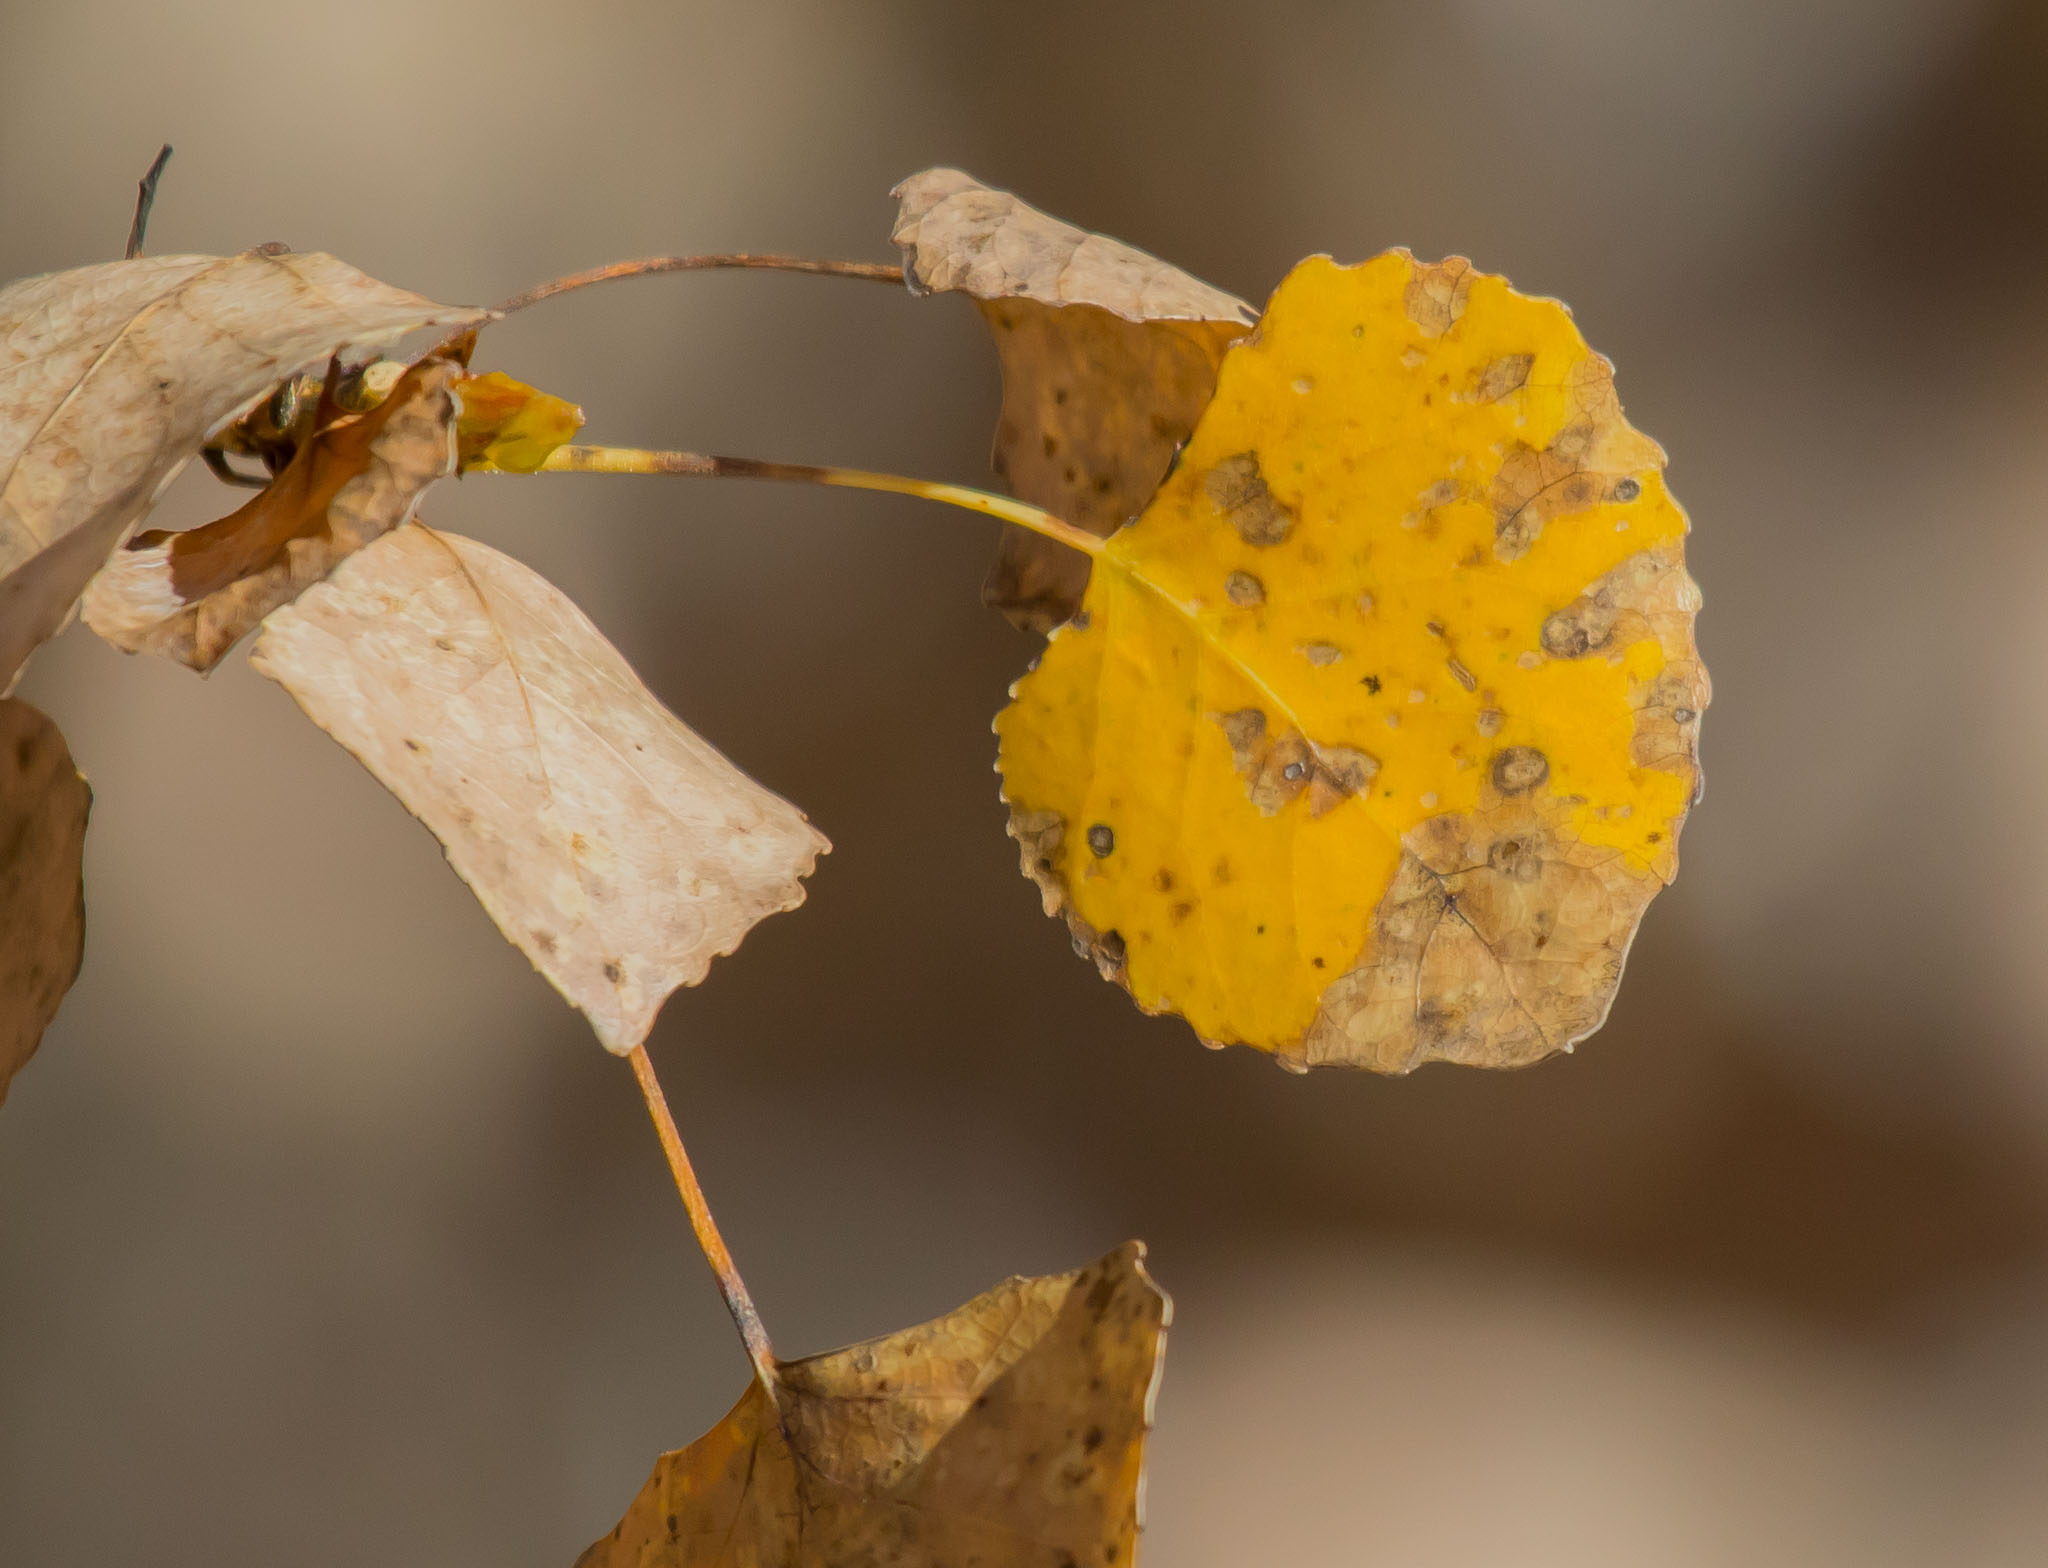 Cottonwood leaf, Bosque del Apache National Wildlife Refuge, San Antonio NM, November 10, 2014